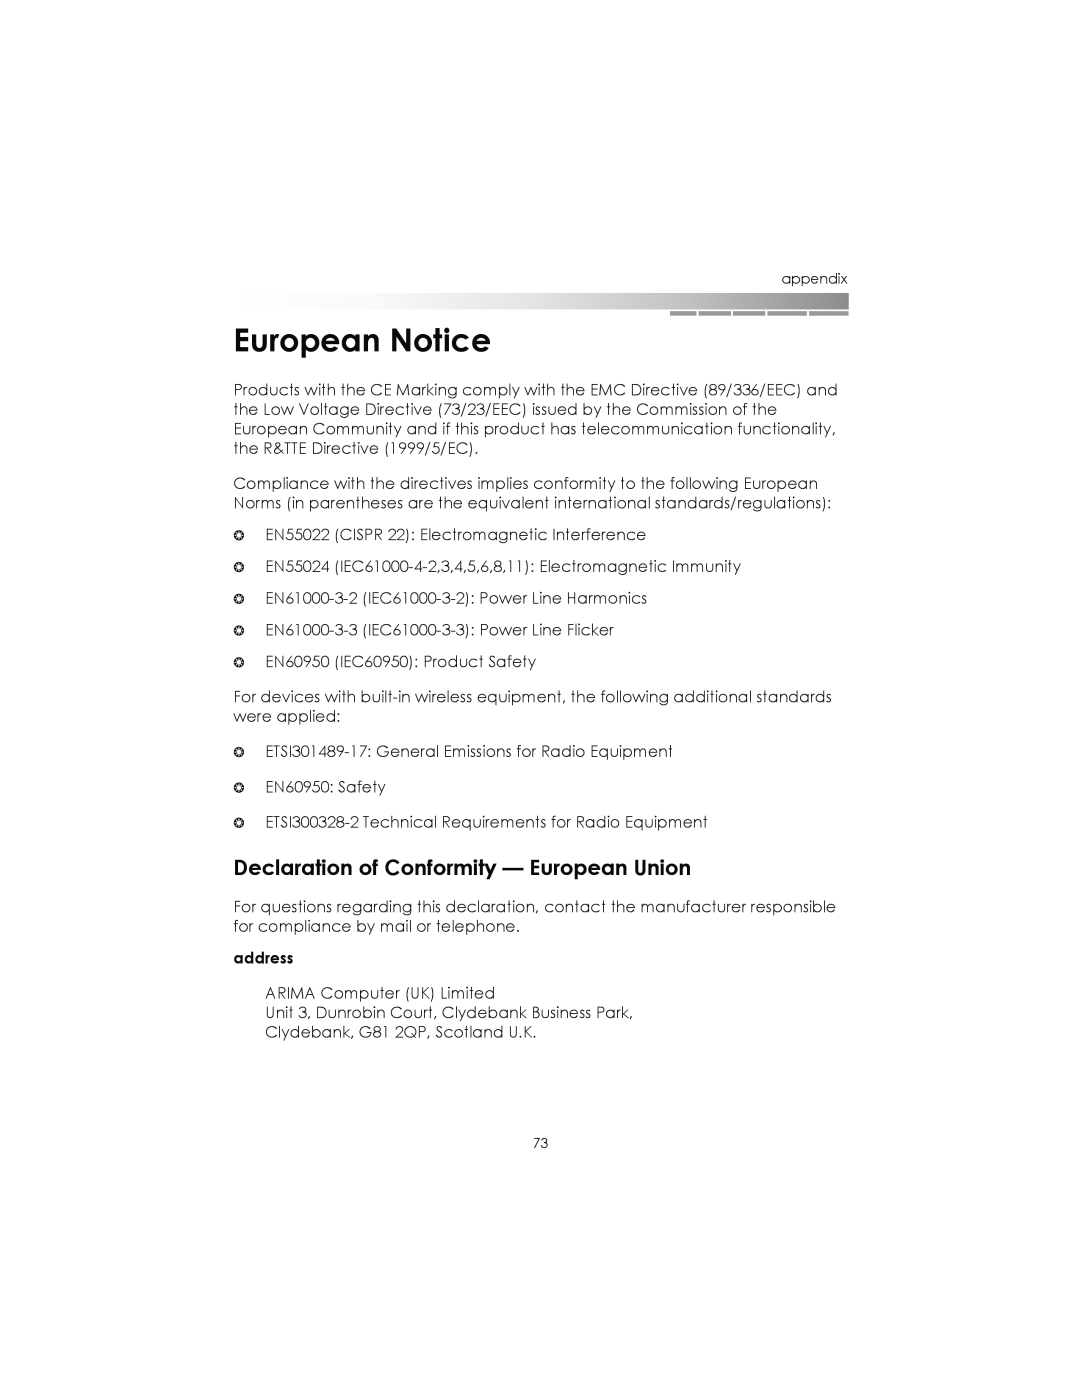 eMachines AAFW53700001K0 manual European Notice, Declaration of Conformity - European Union 